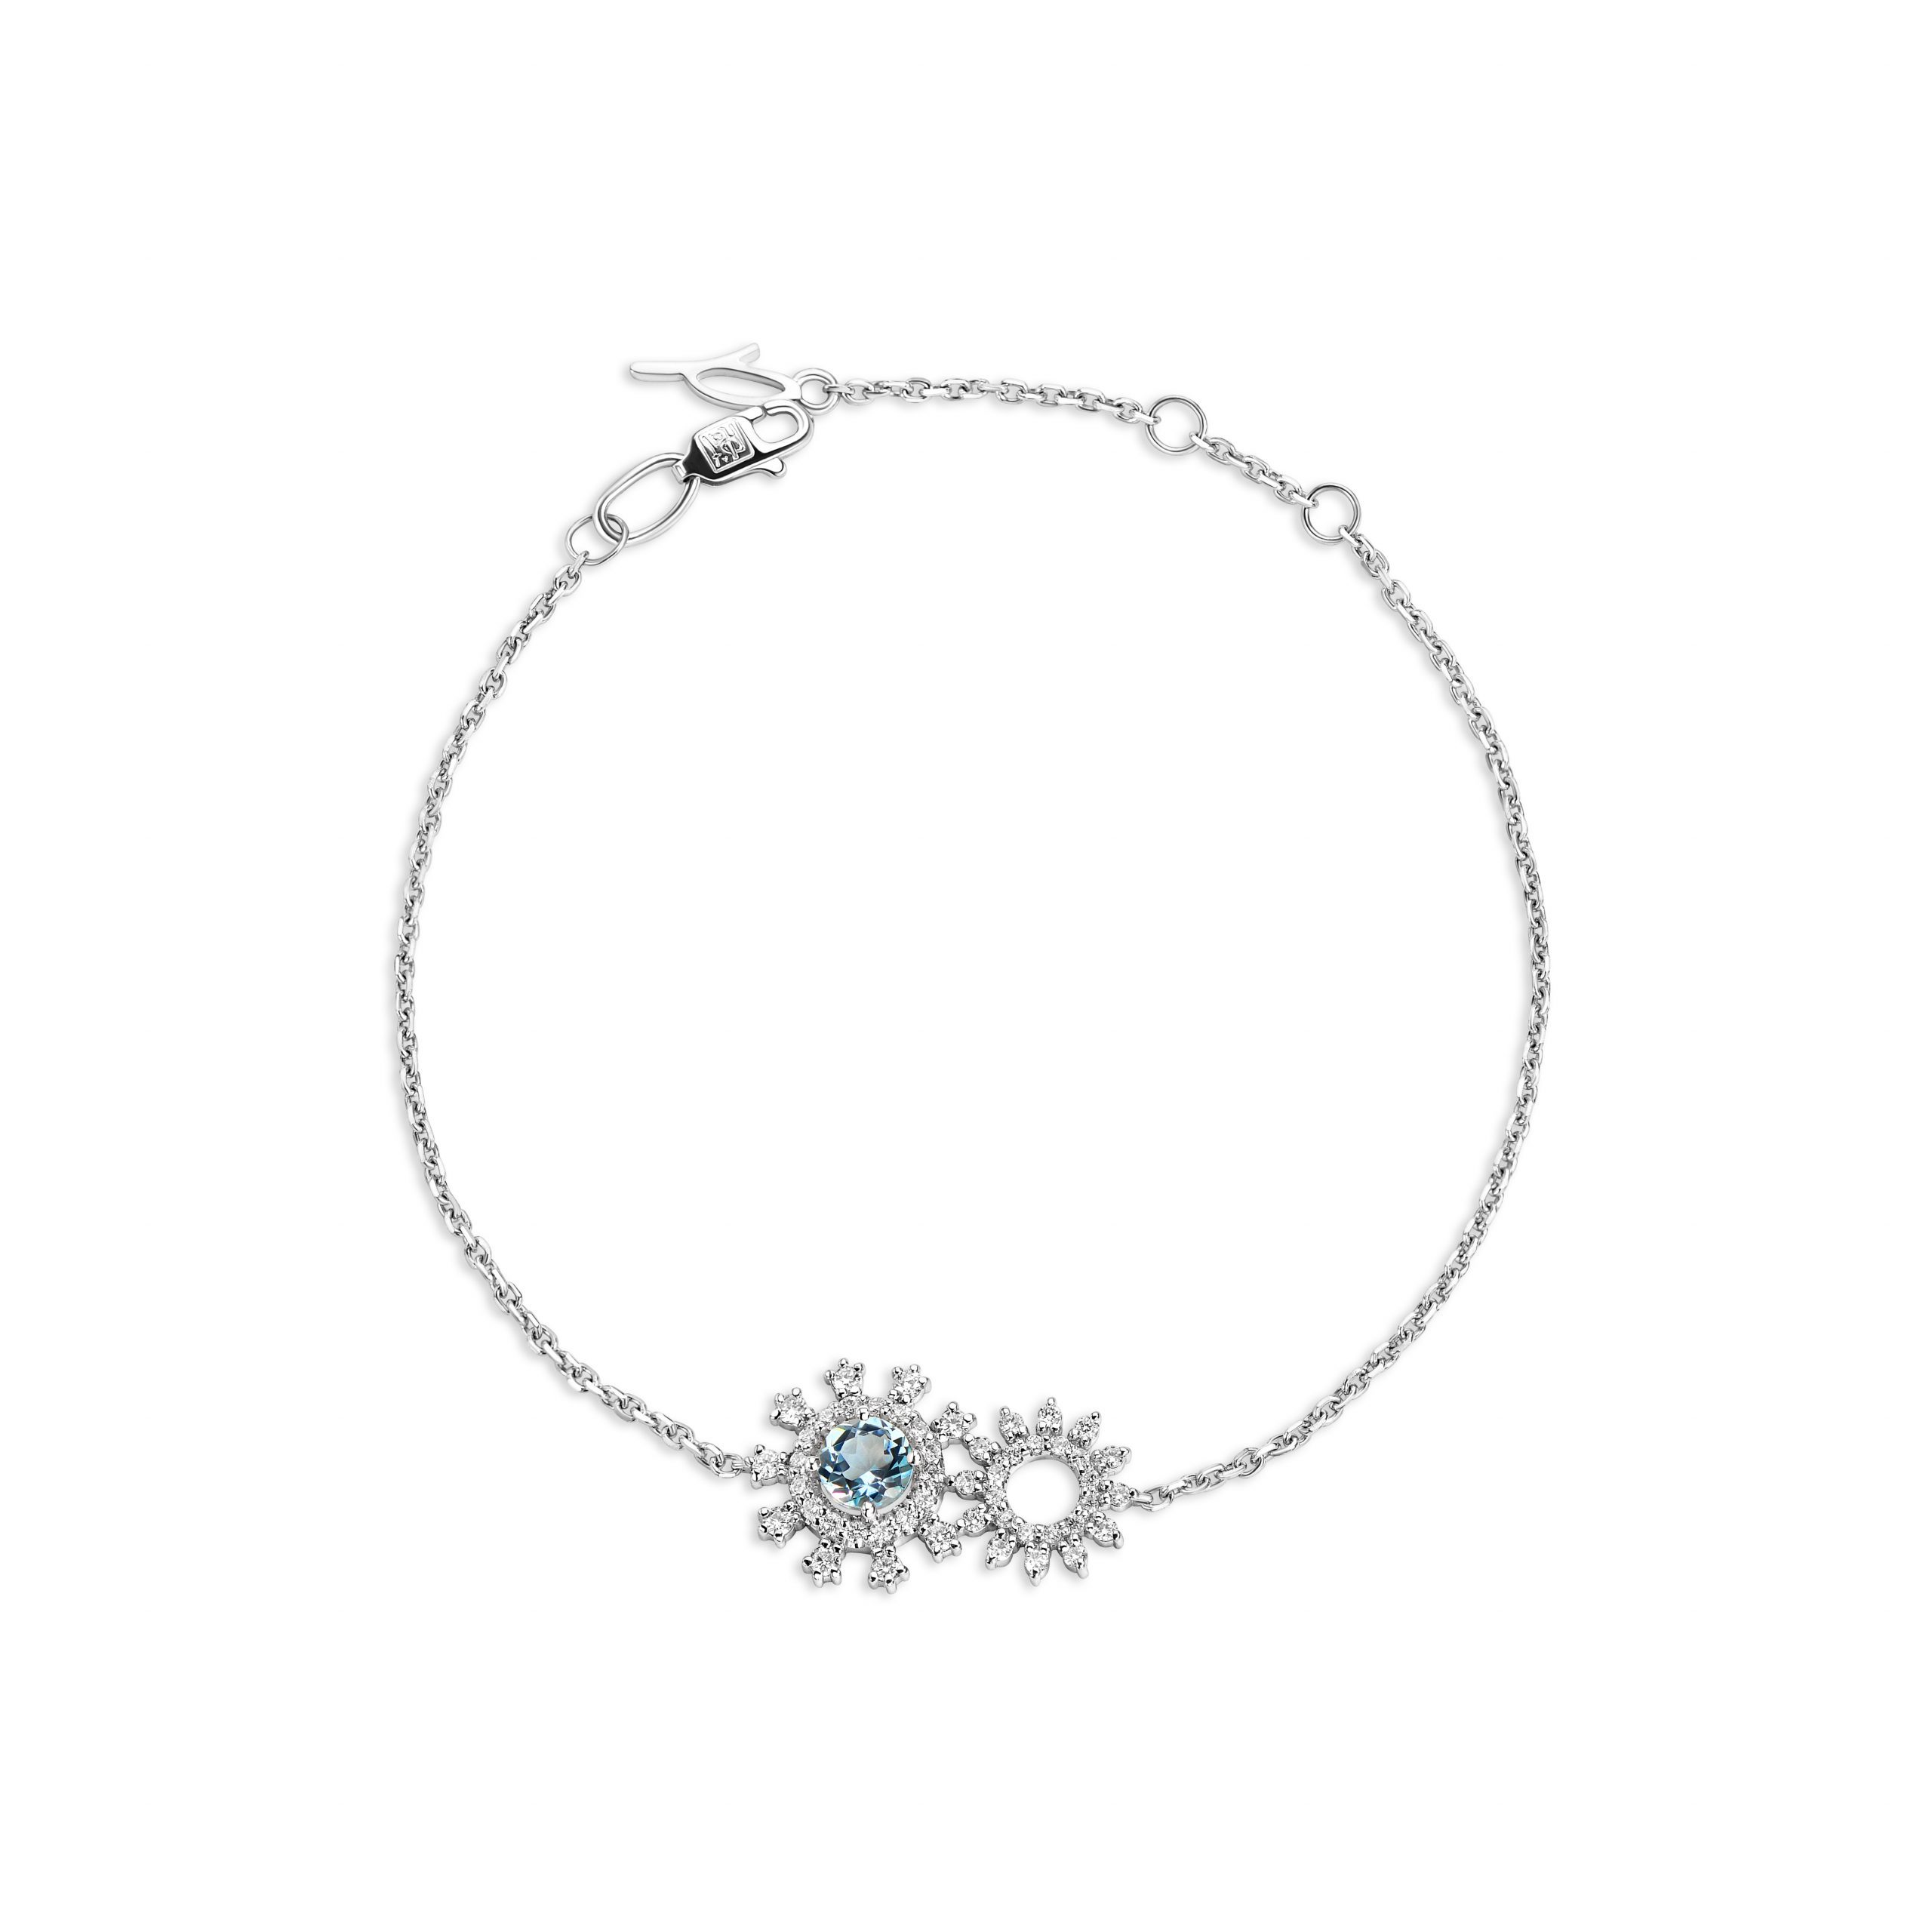 Bracelet with aquamarines and diamonds #1